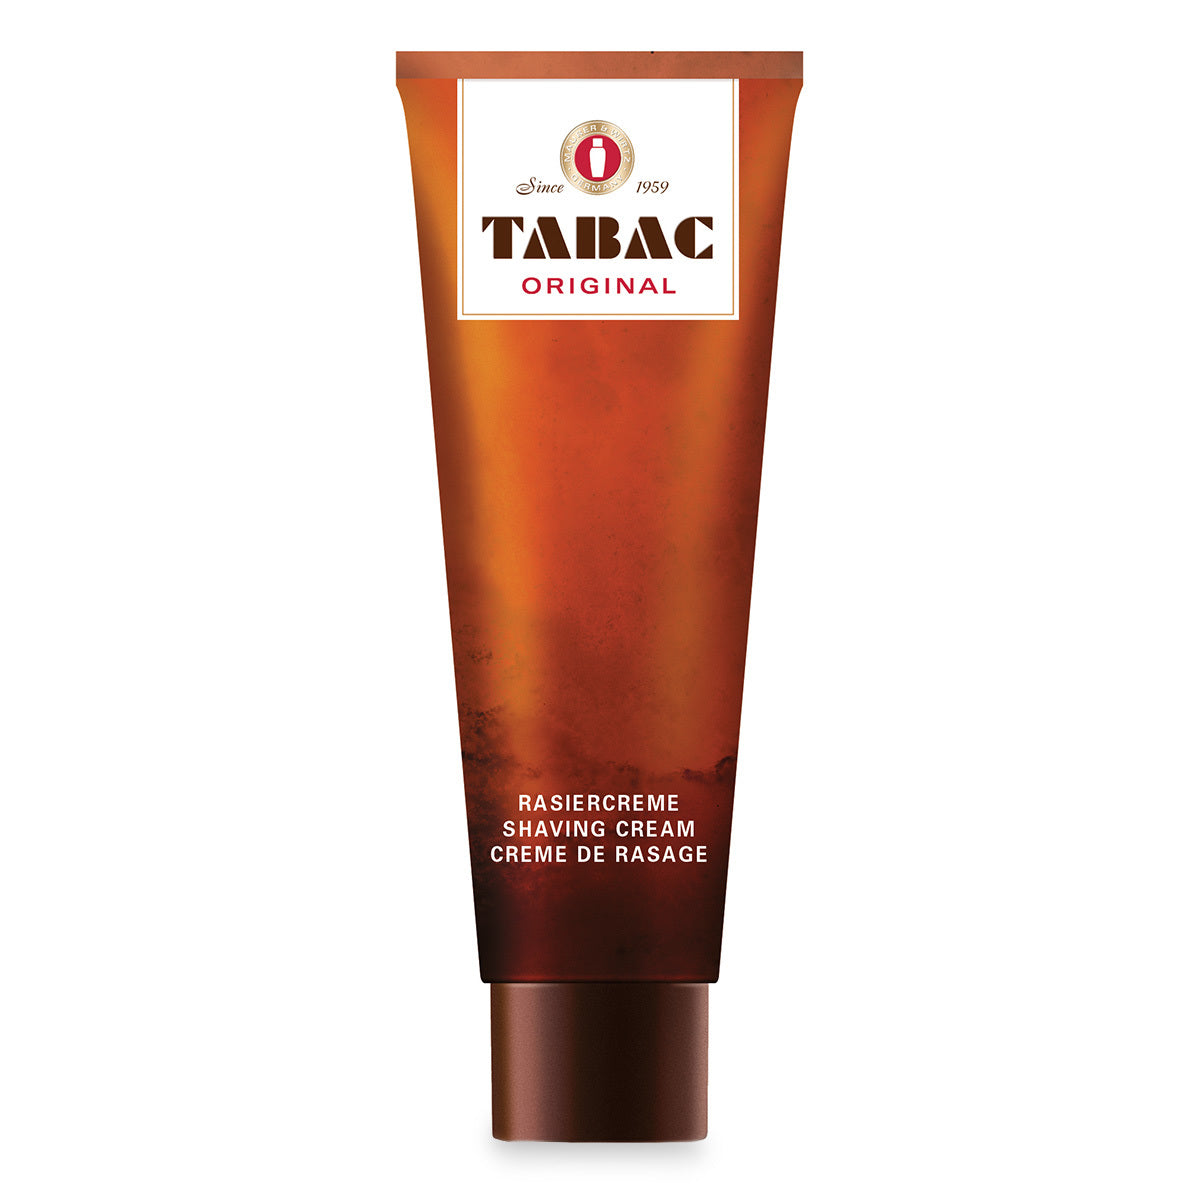 Primary image of Tabac Original Shaving Cream